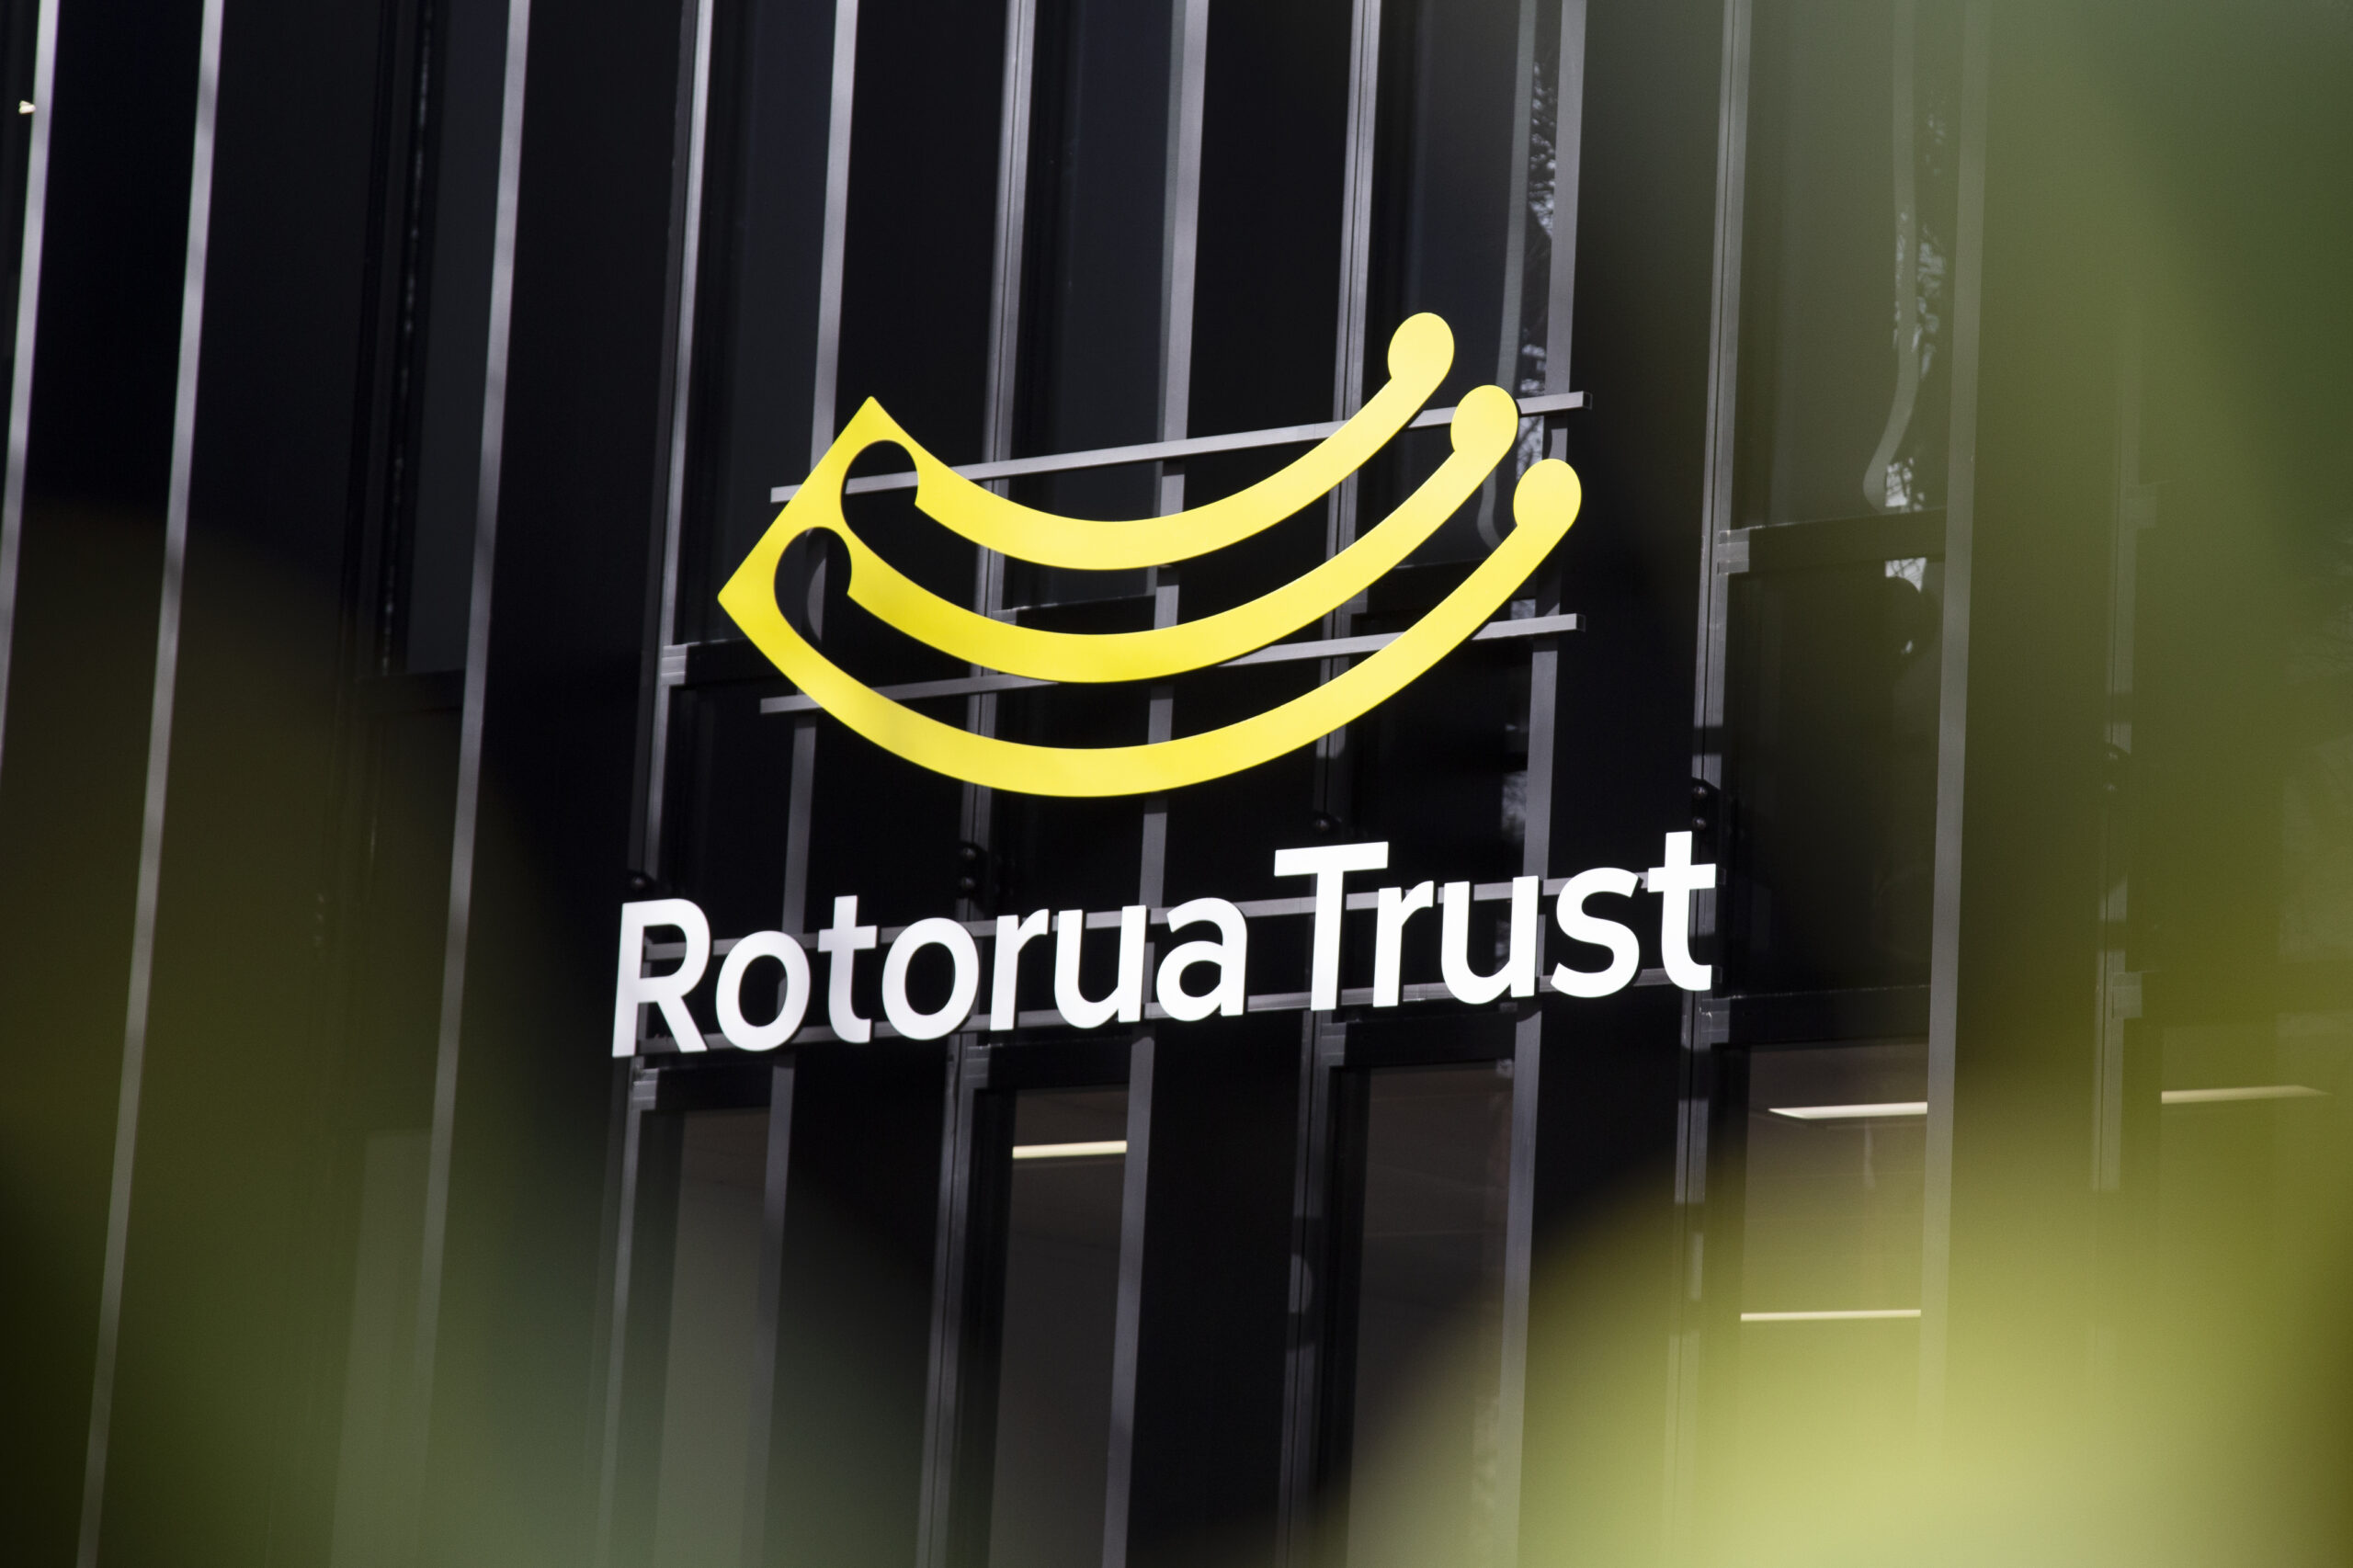 Rotorua Trust Shares Christmas Joy